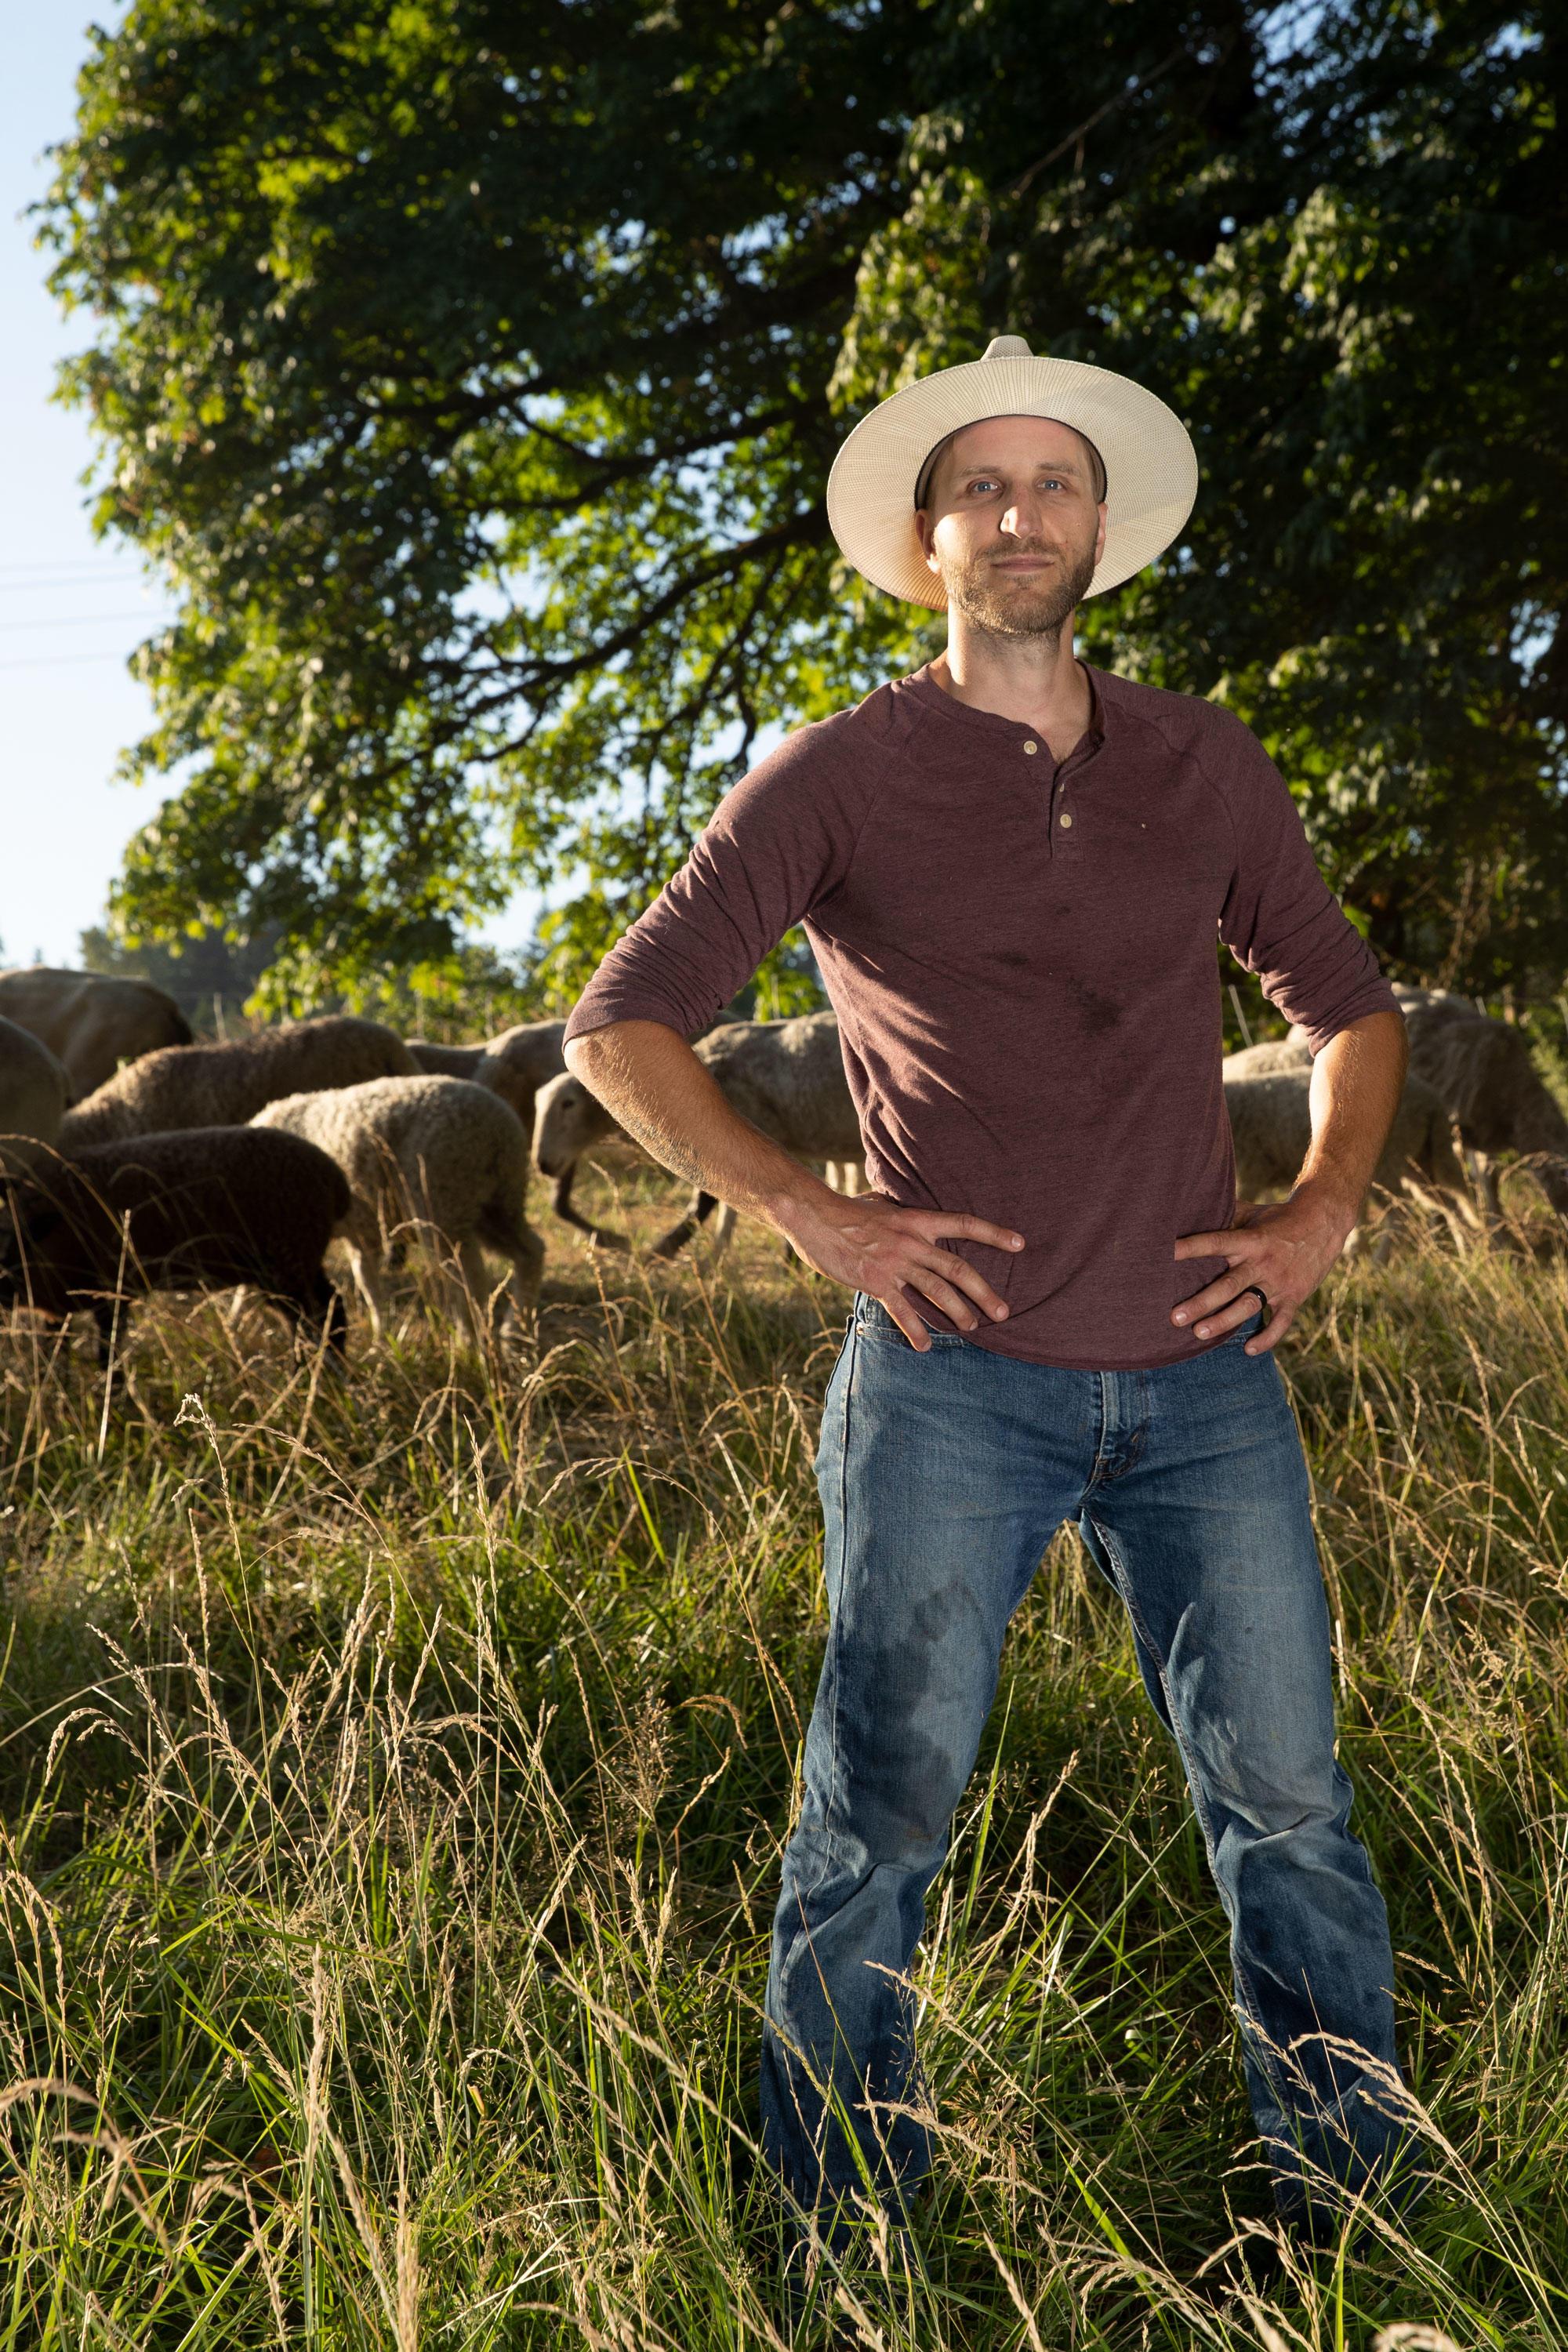 Jacob Mogler raises sheep on 14 acres near Corvallis.